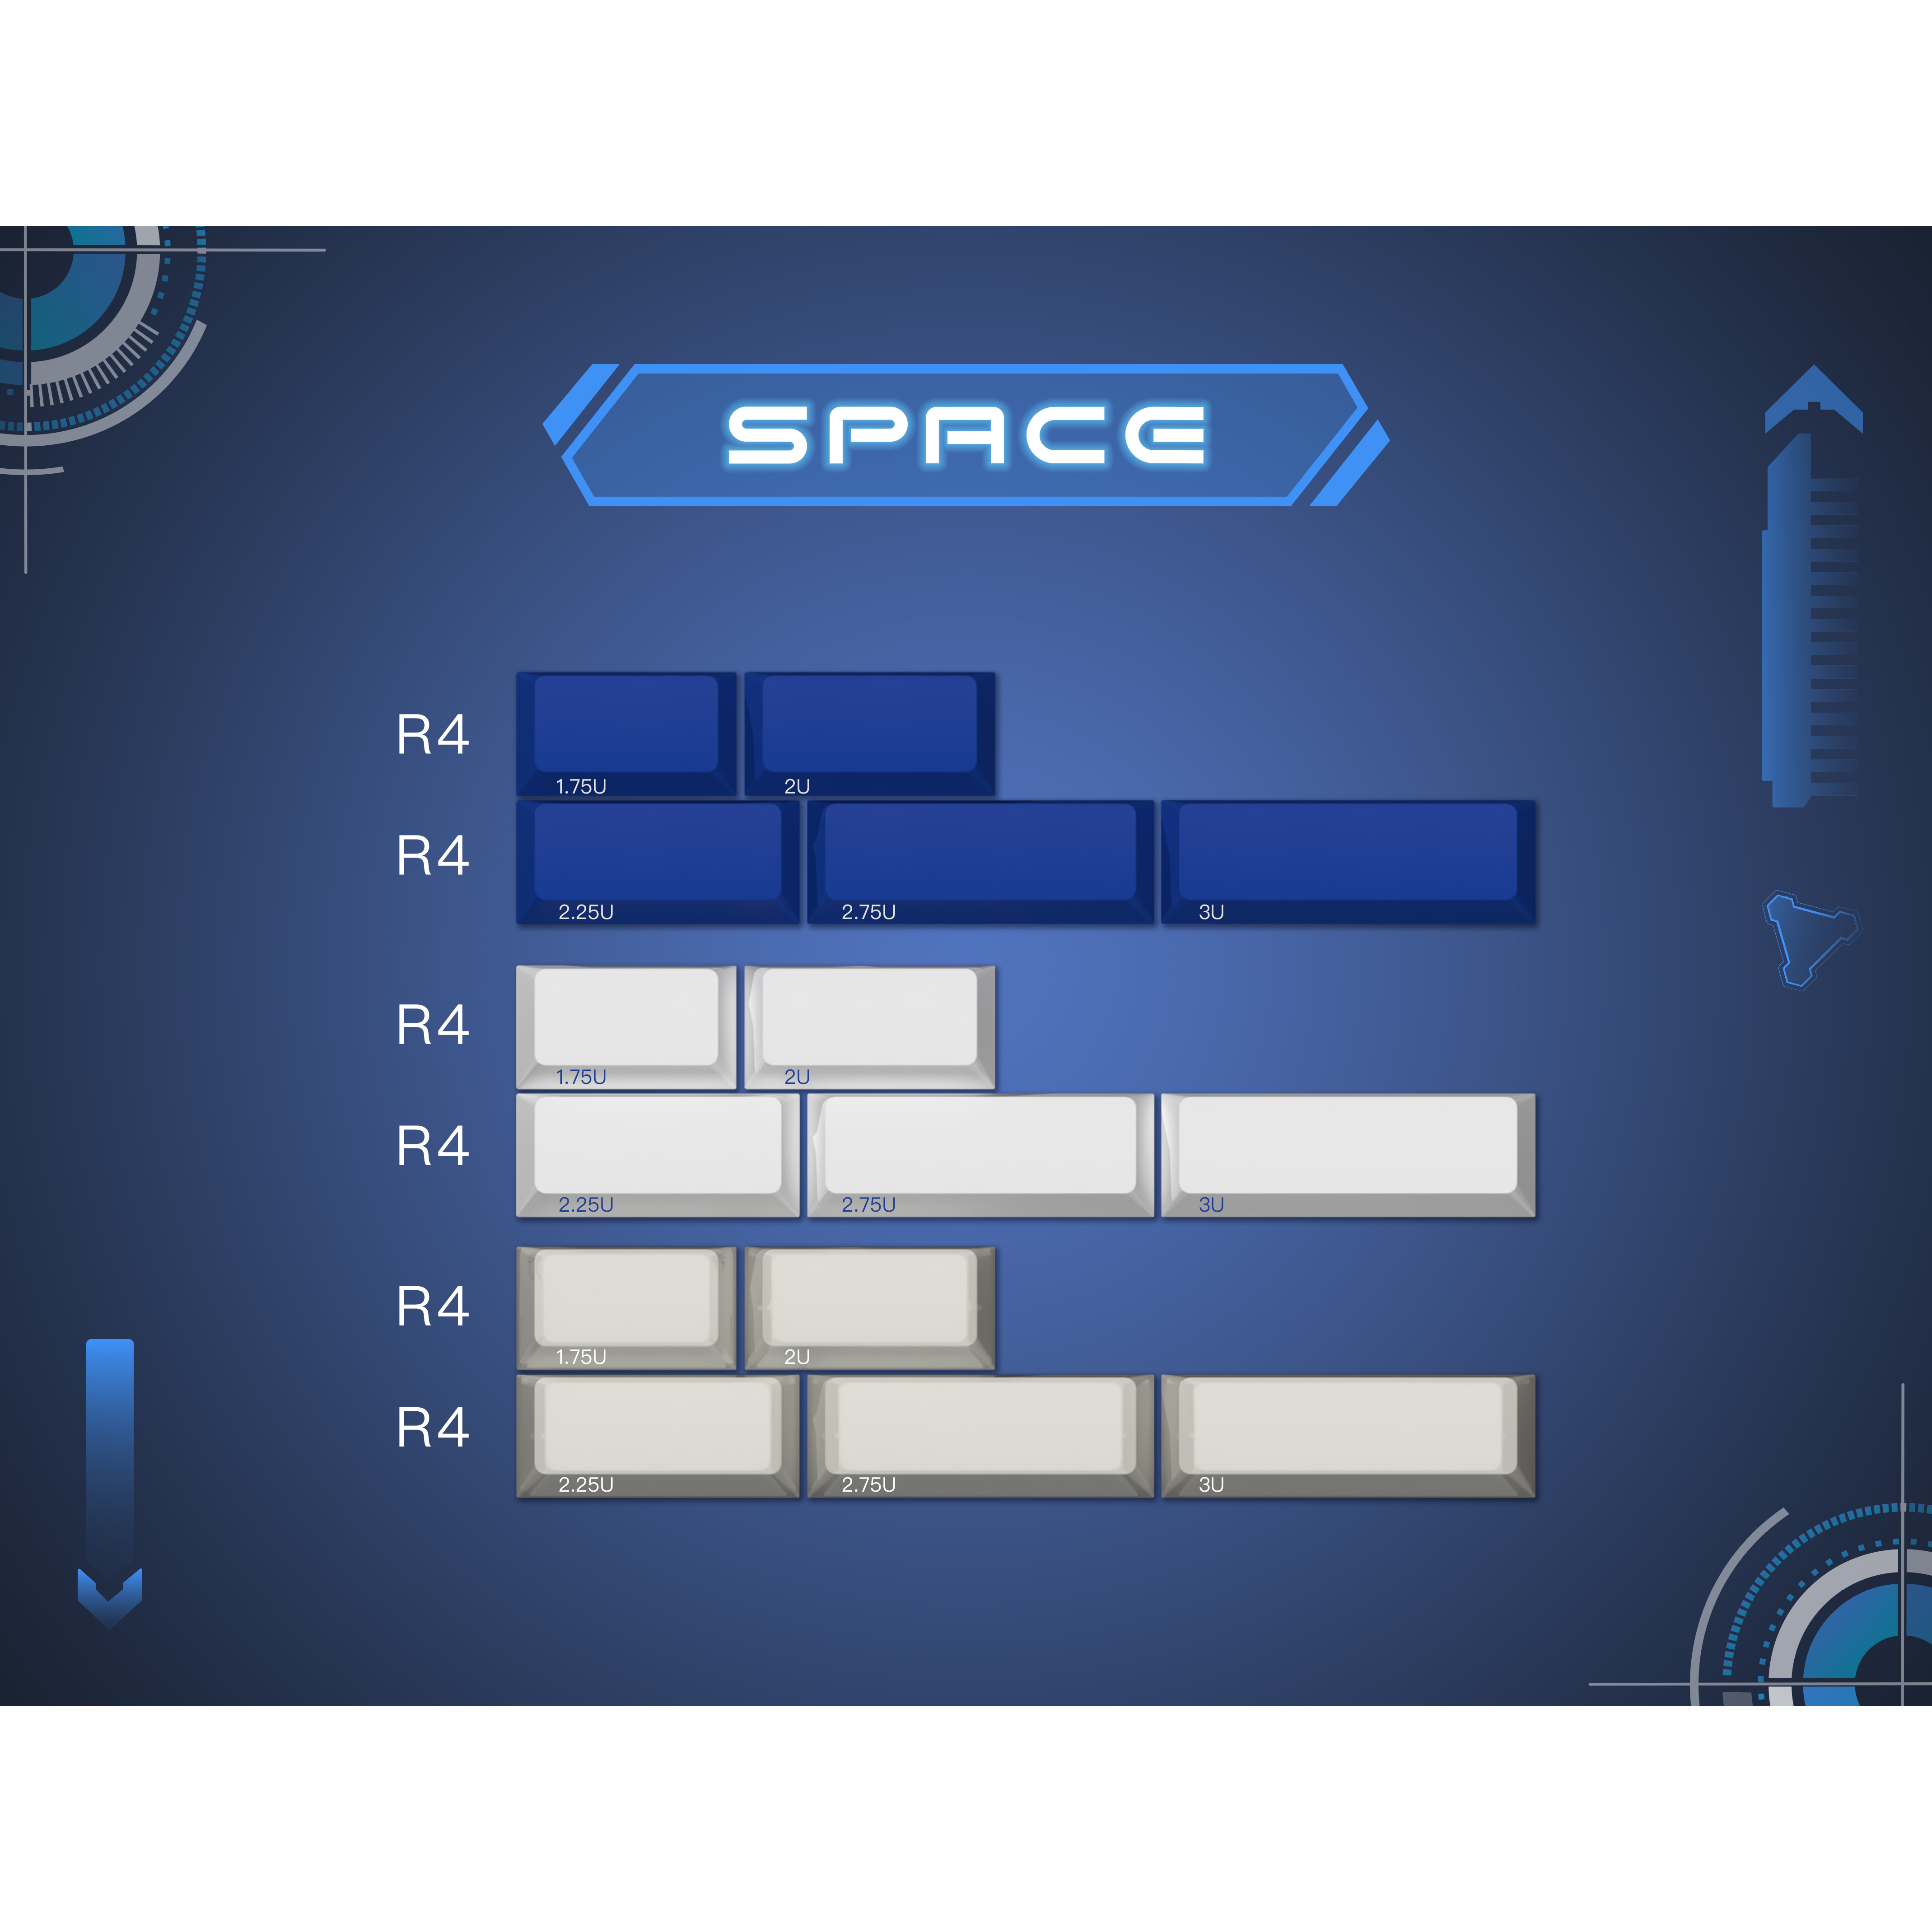 Zero-G Studio X DMK ABS Keycaps "THIRD SPACE"